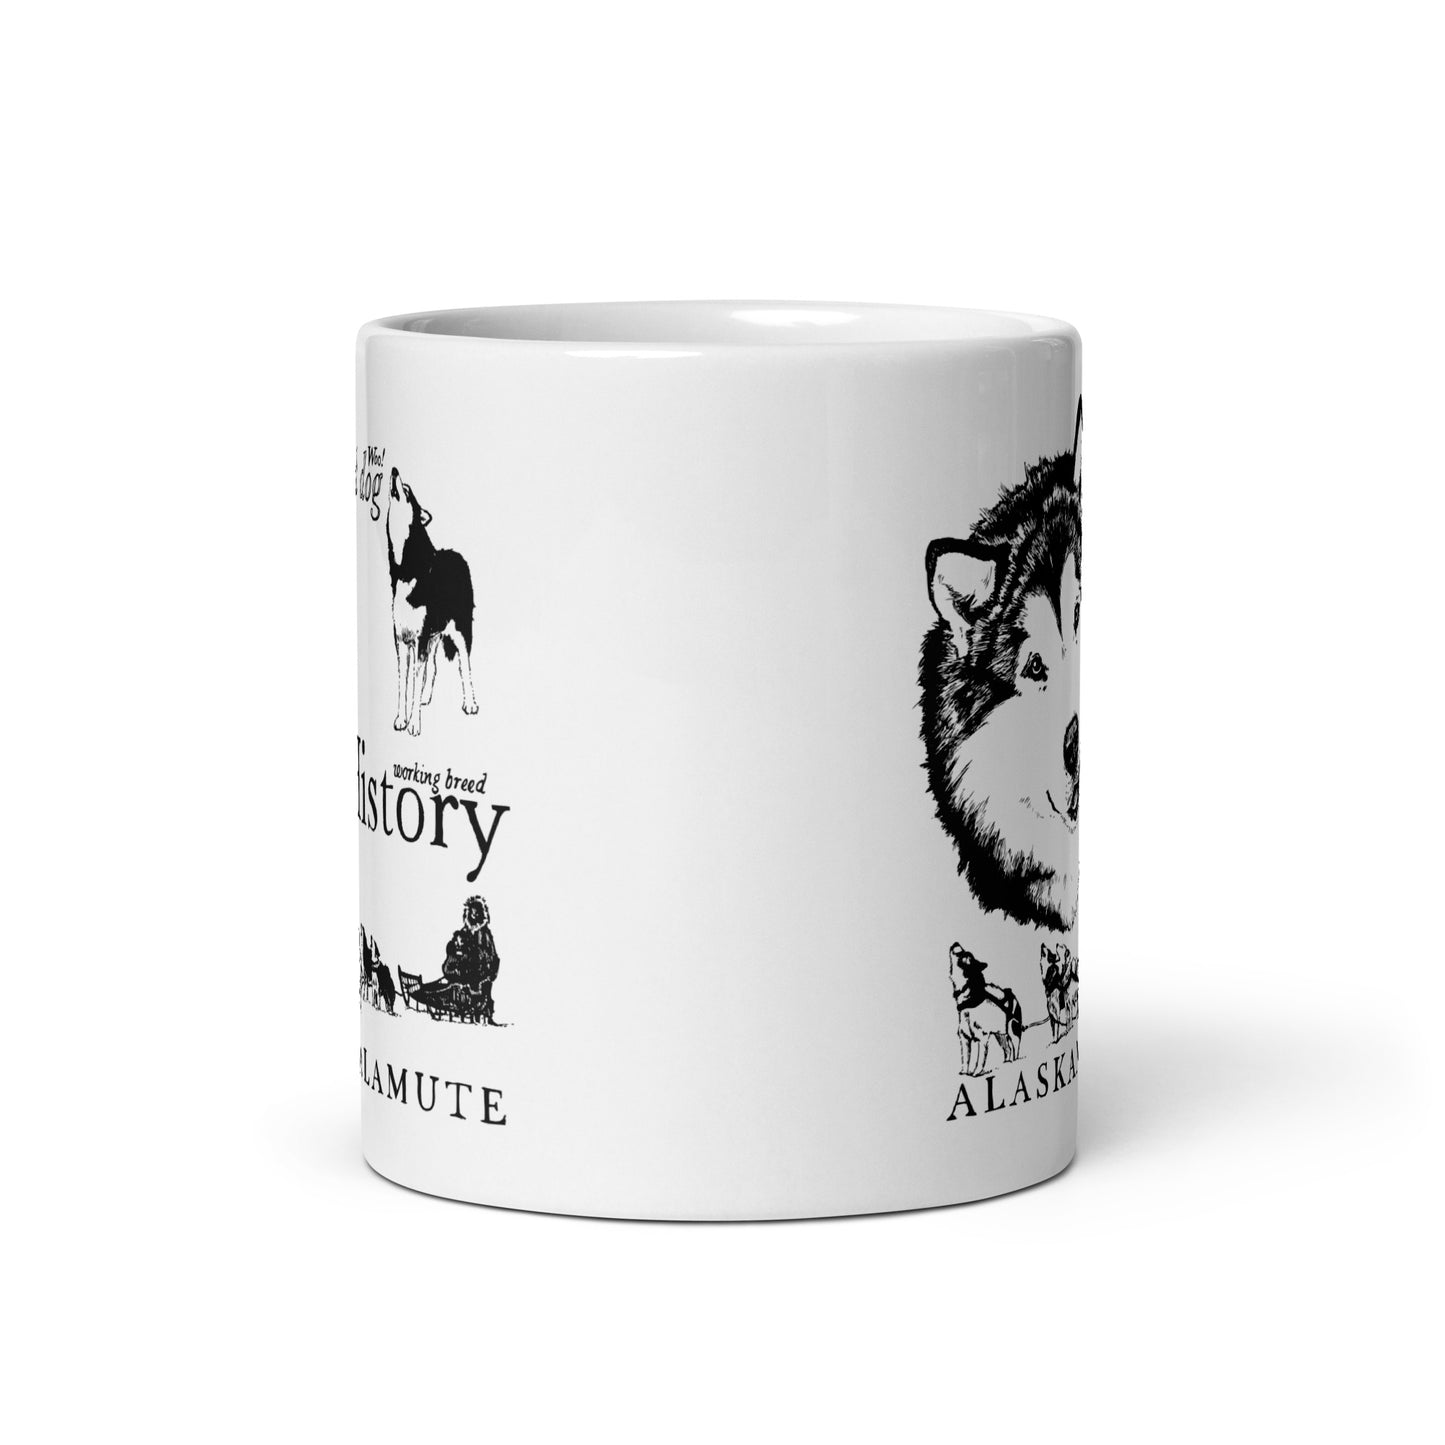 Alaskan Malamute History - Coffee Mug